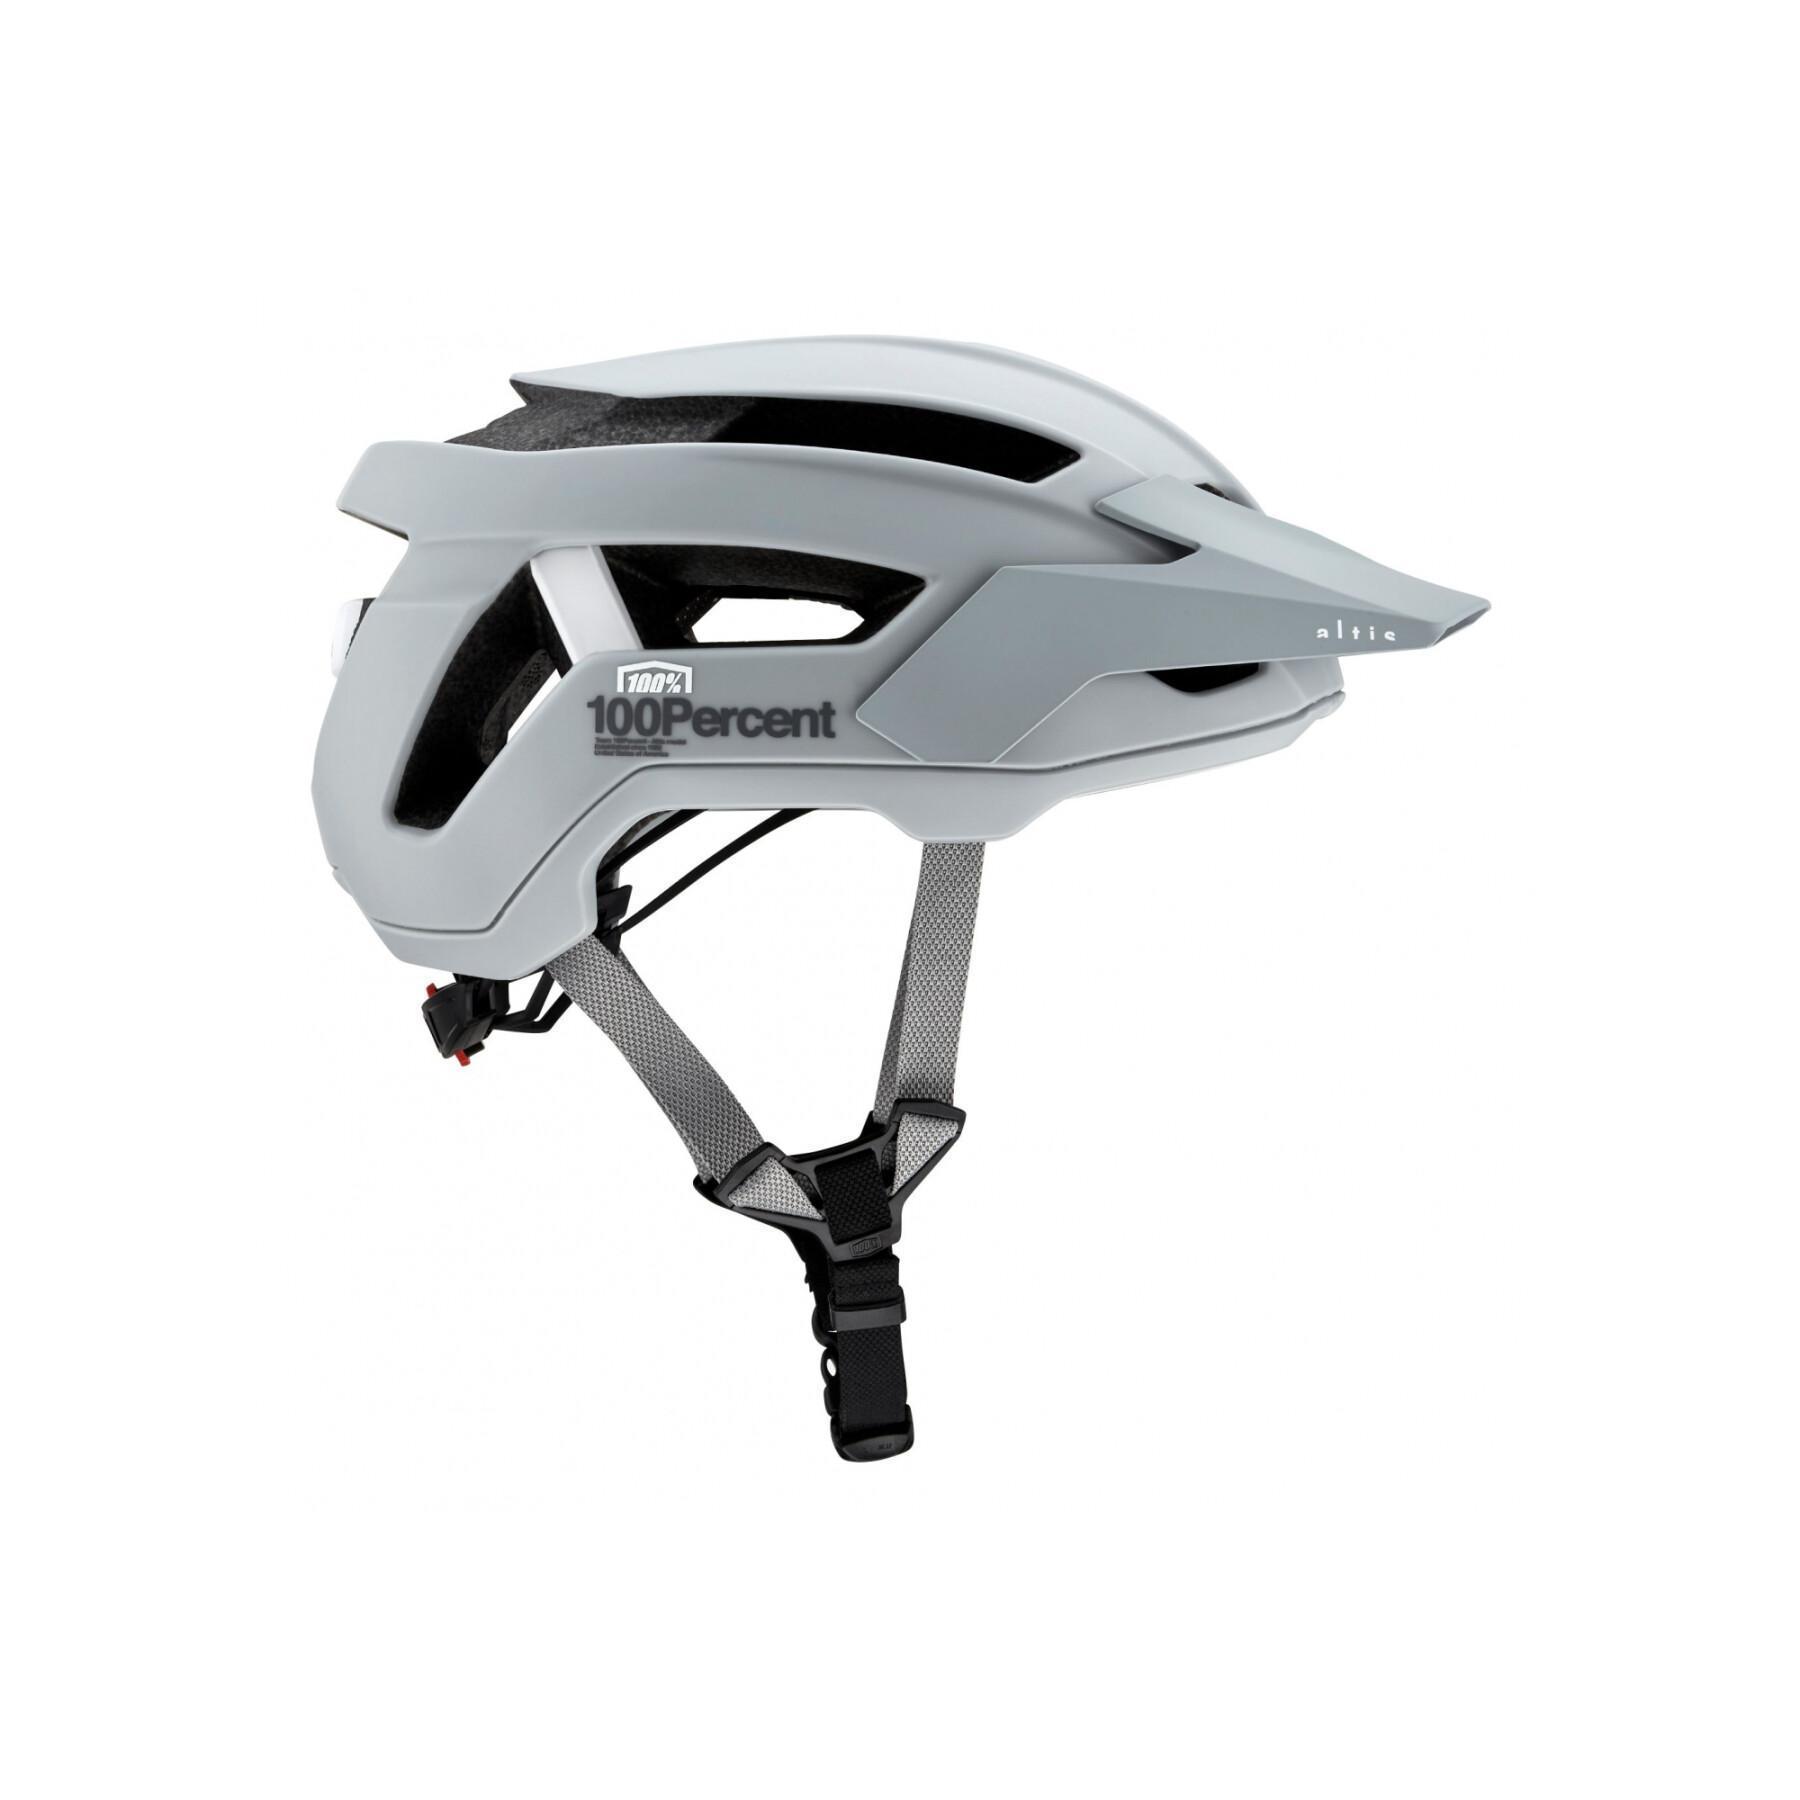 100% bicycle helmet Altis